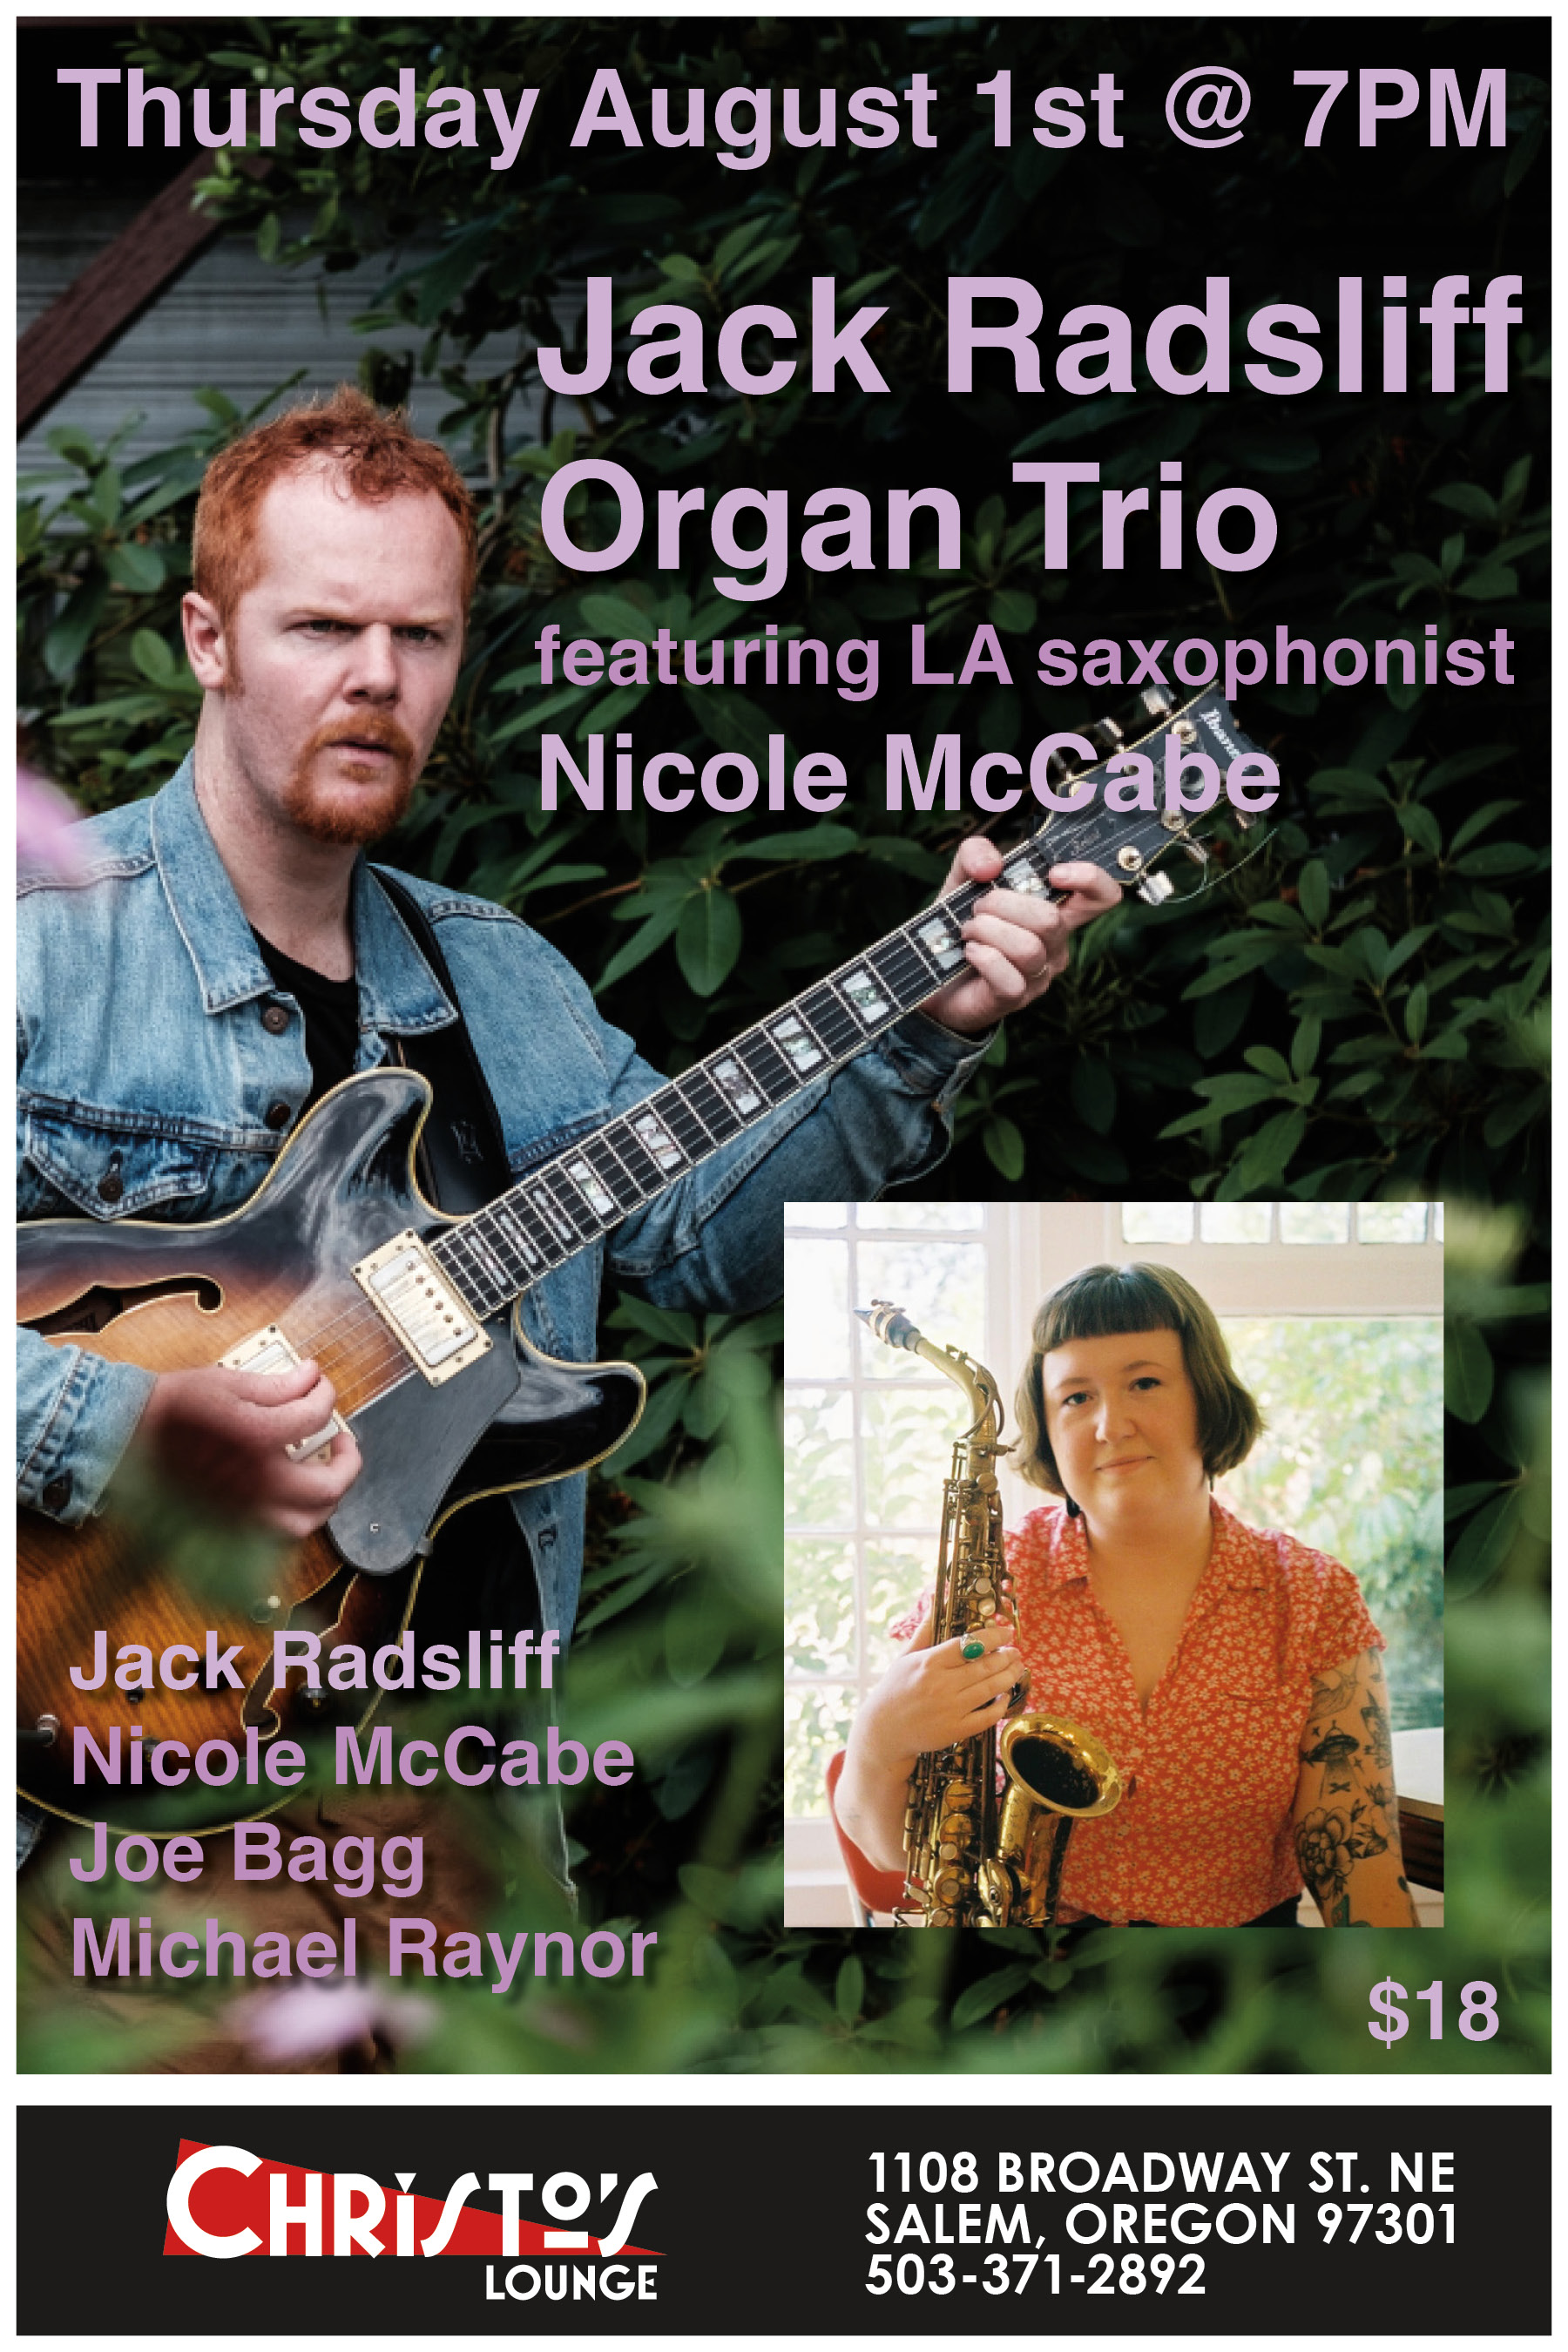 The Jack Radsliff Organ Trio ft. LA Saxophonist Nicole McCabe